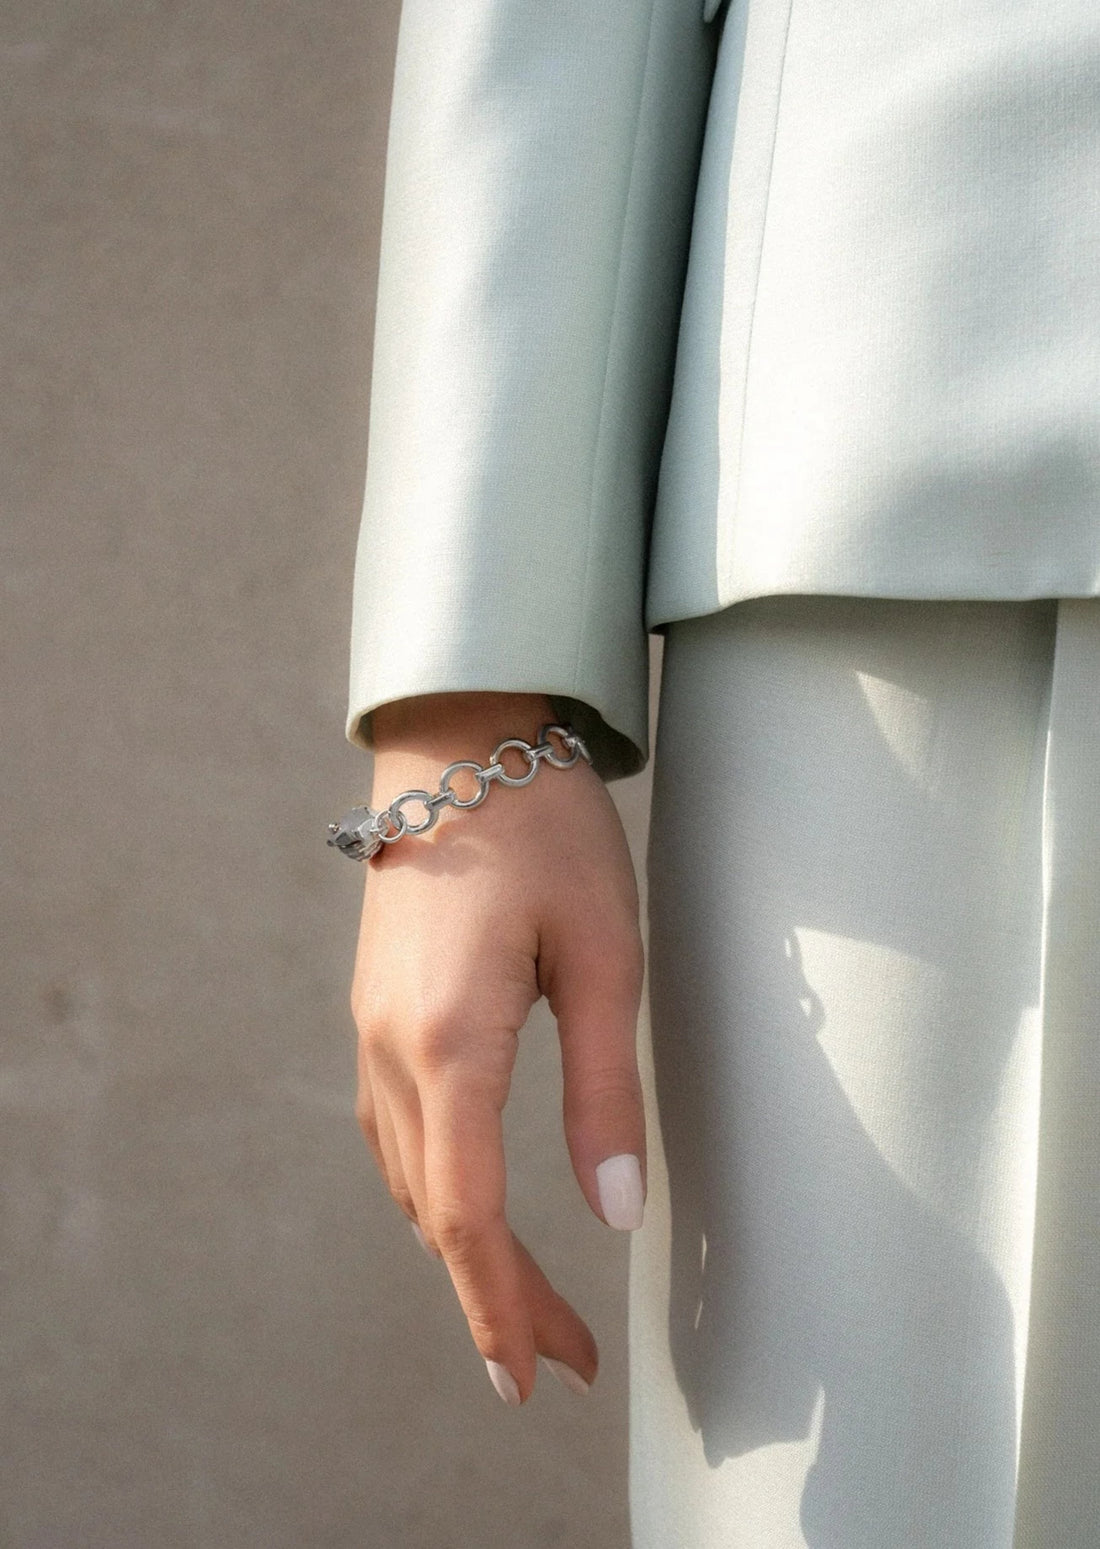 Models hand by her side wearing Gentlewoman's agreement bracelet